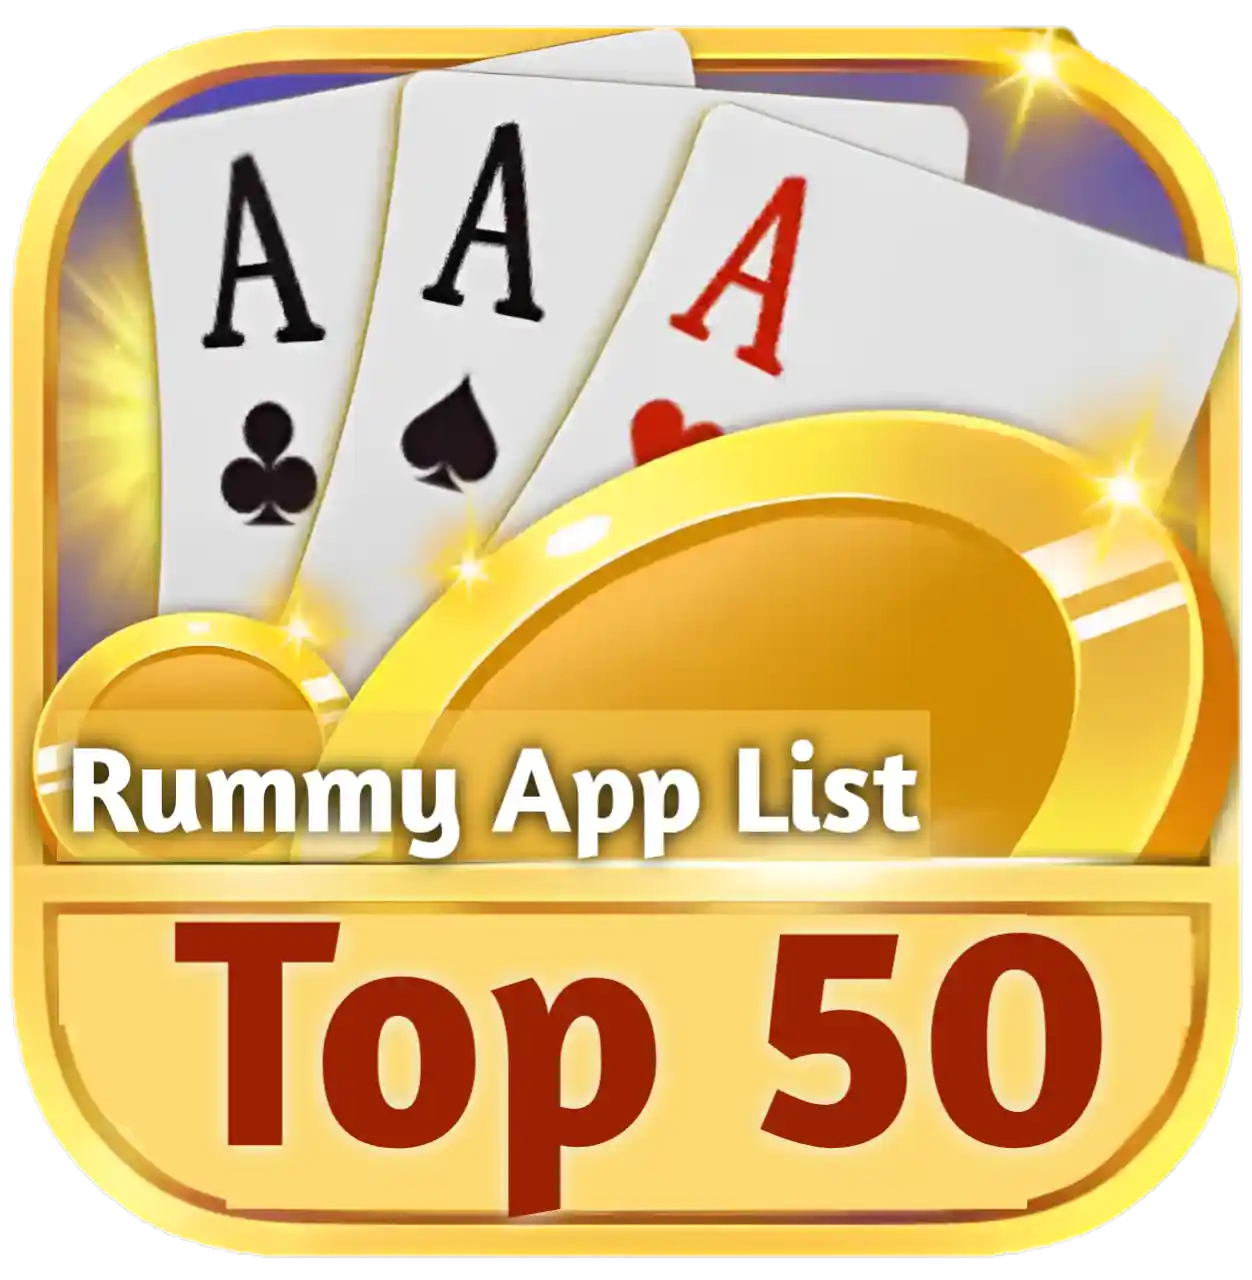 Top 50 Rummy App List - Top 20 Teen Patti App List 51 Bonus - Super Rummy App